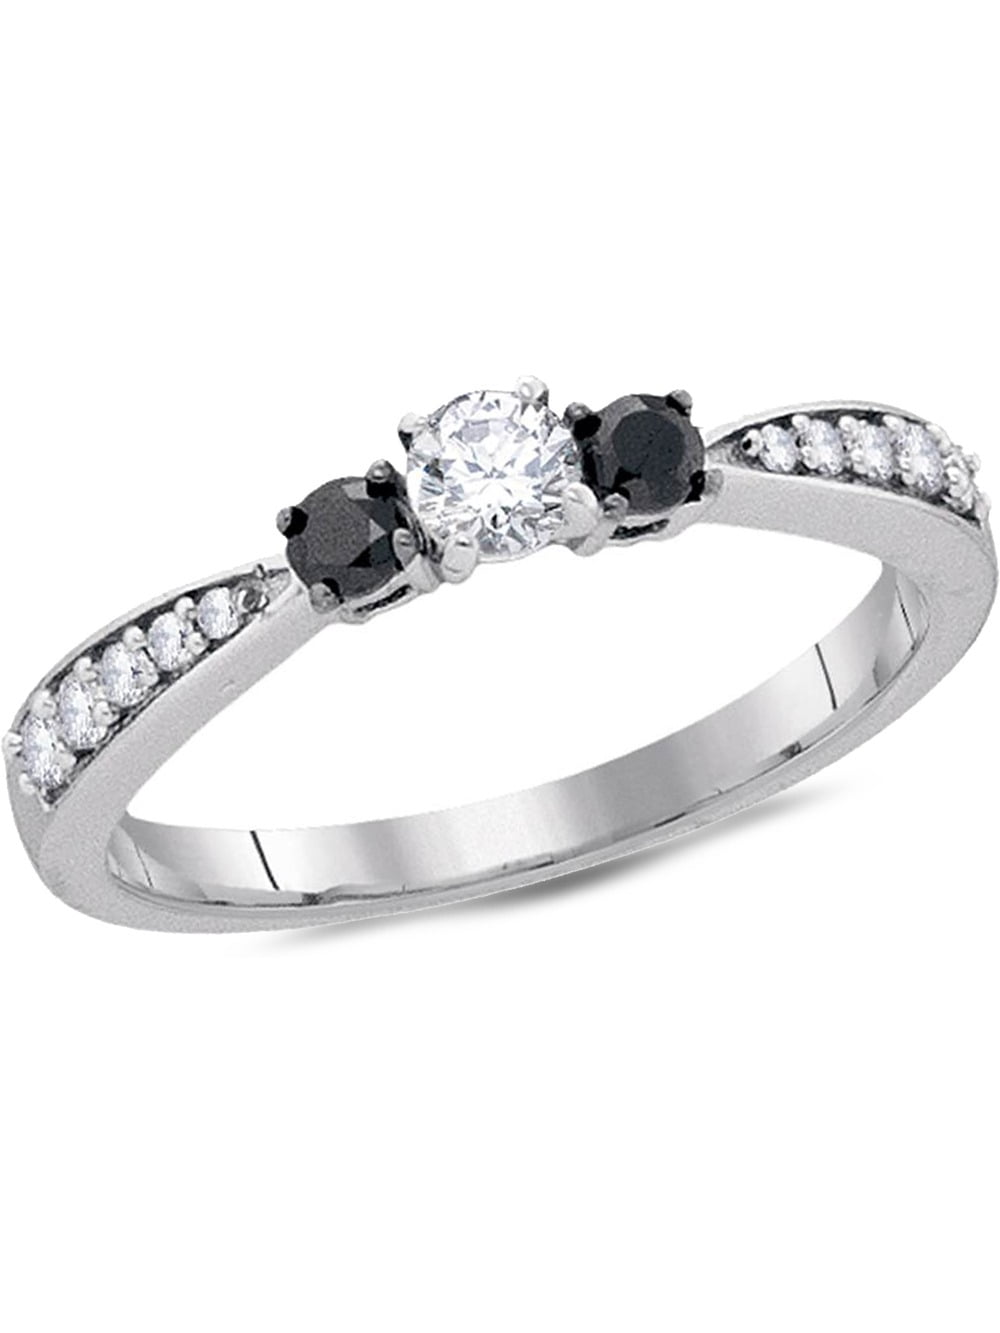 Details about   Three Stone Black Diamond Engagement Ring Band Set For Women Bridal Wedding Set 